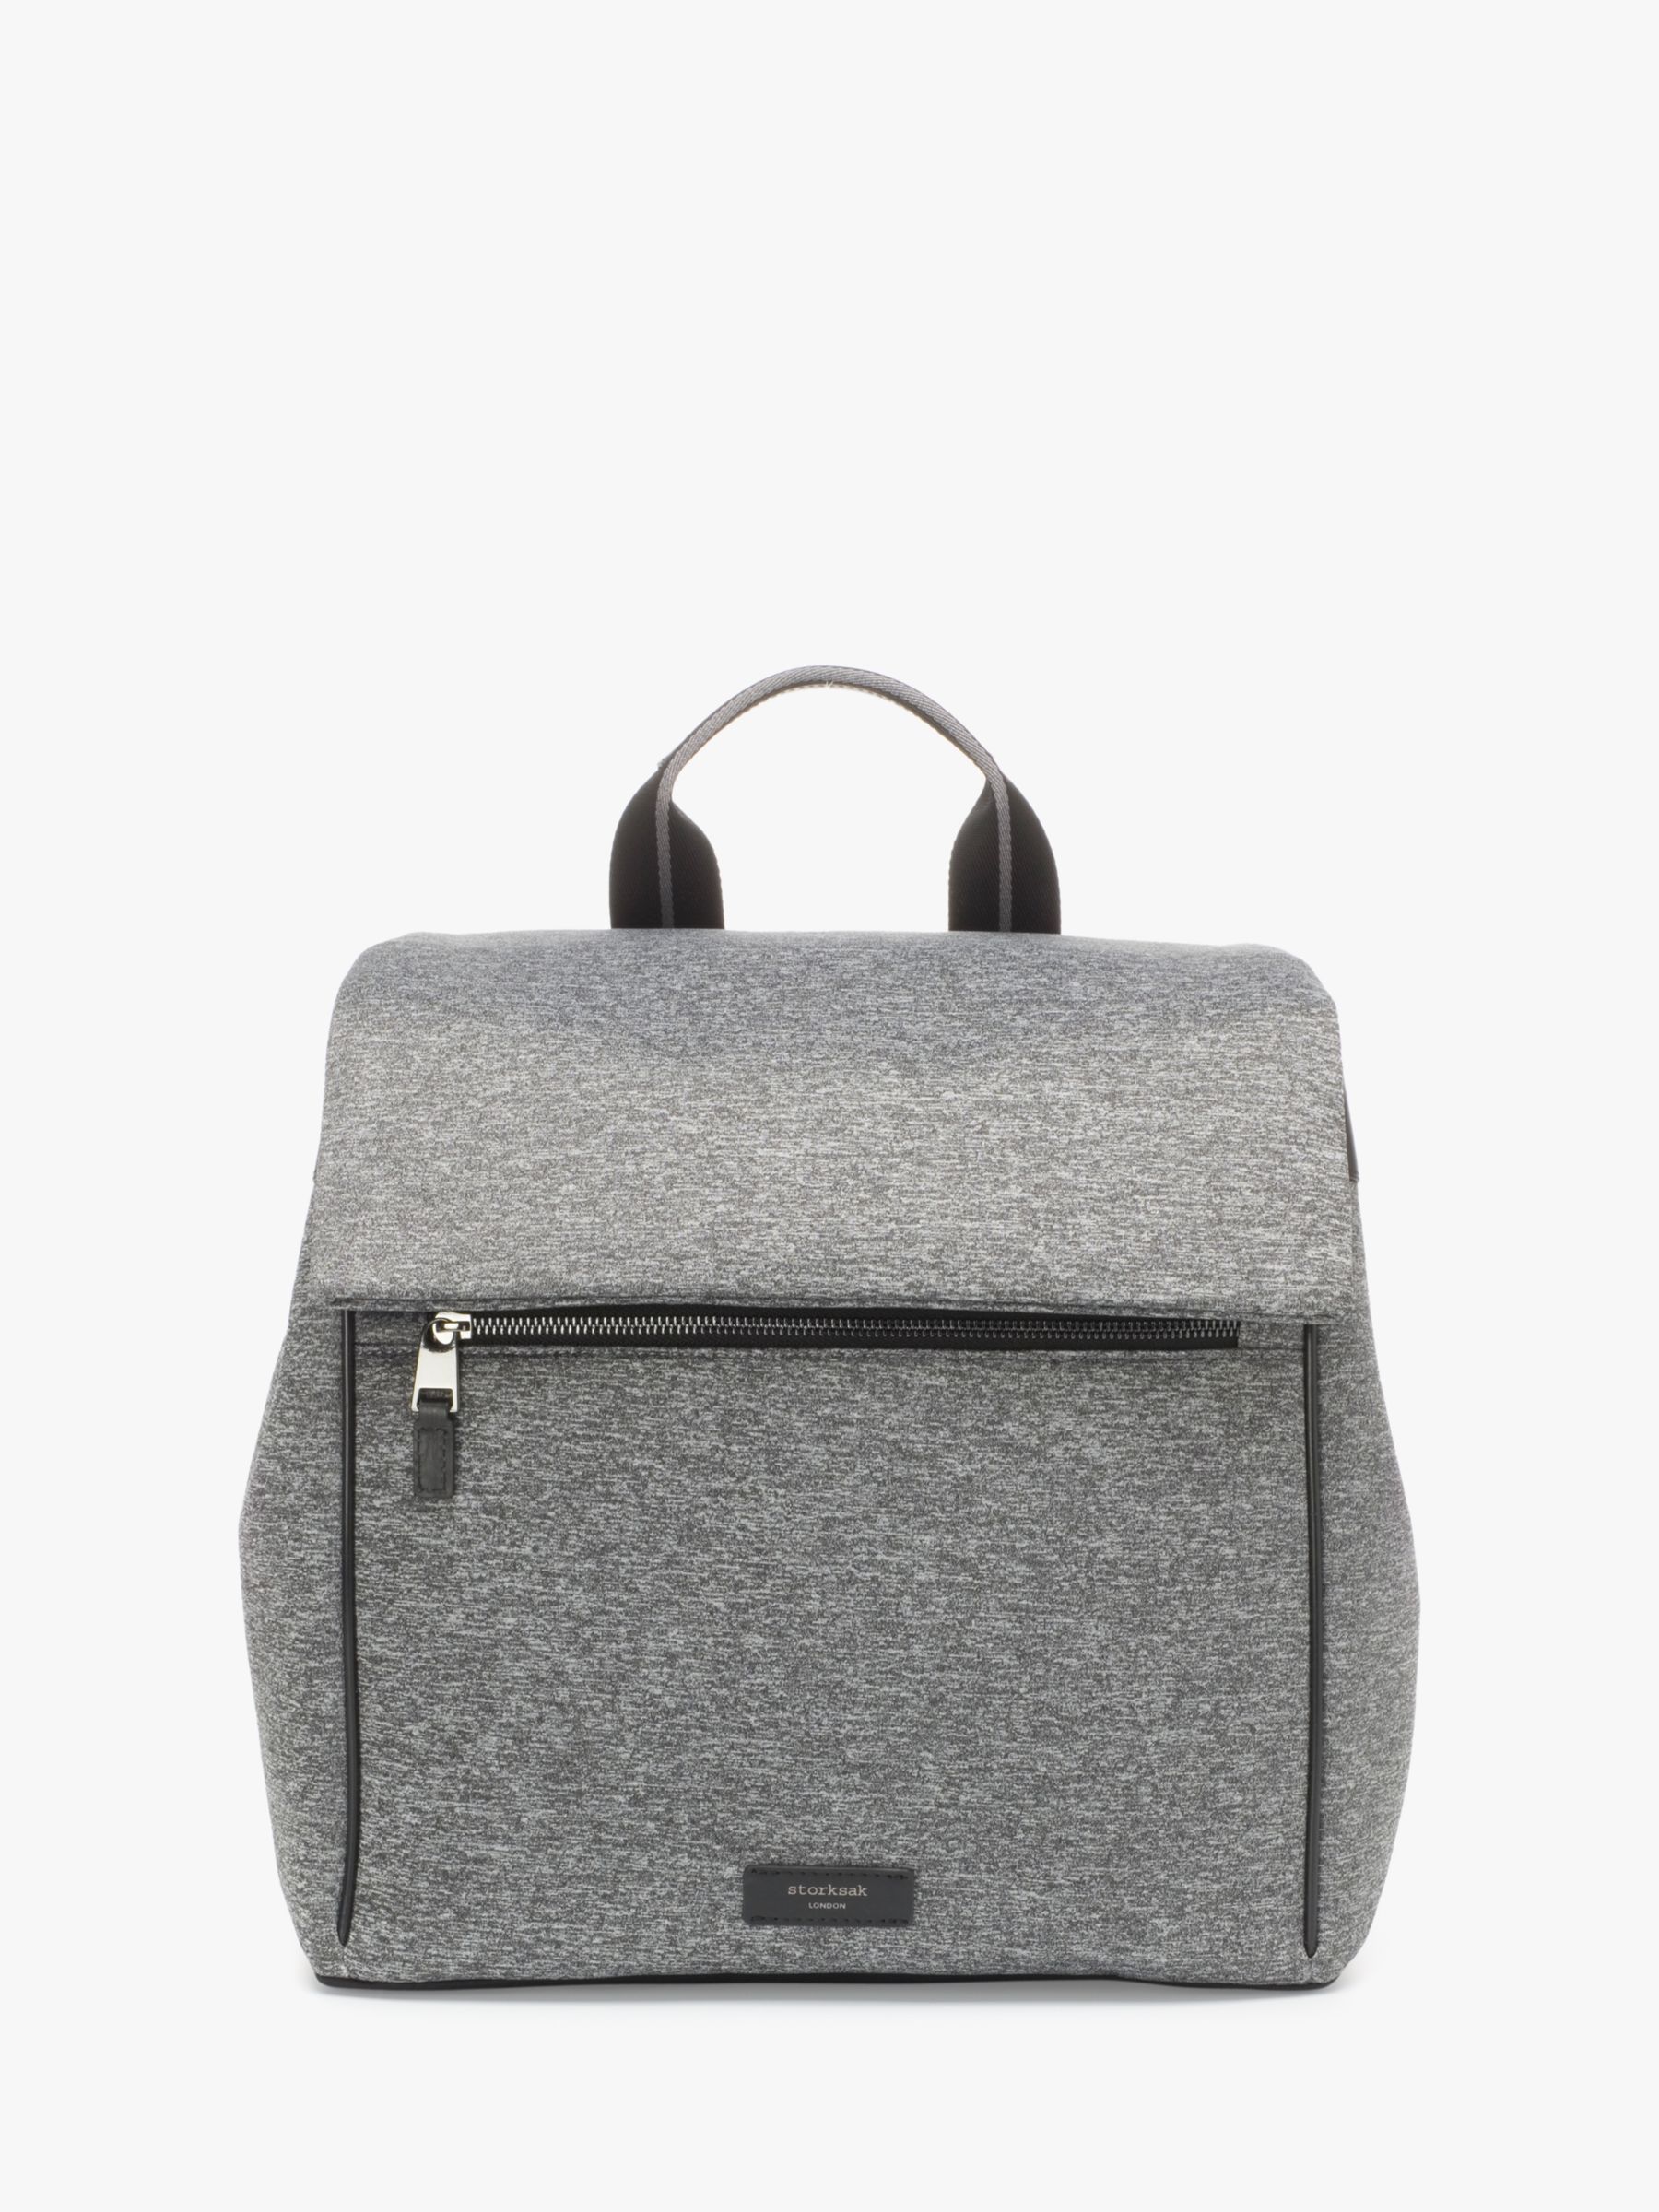 storksak grey changing bag